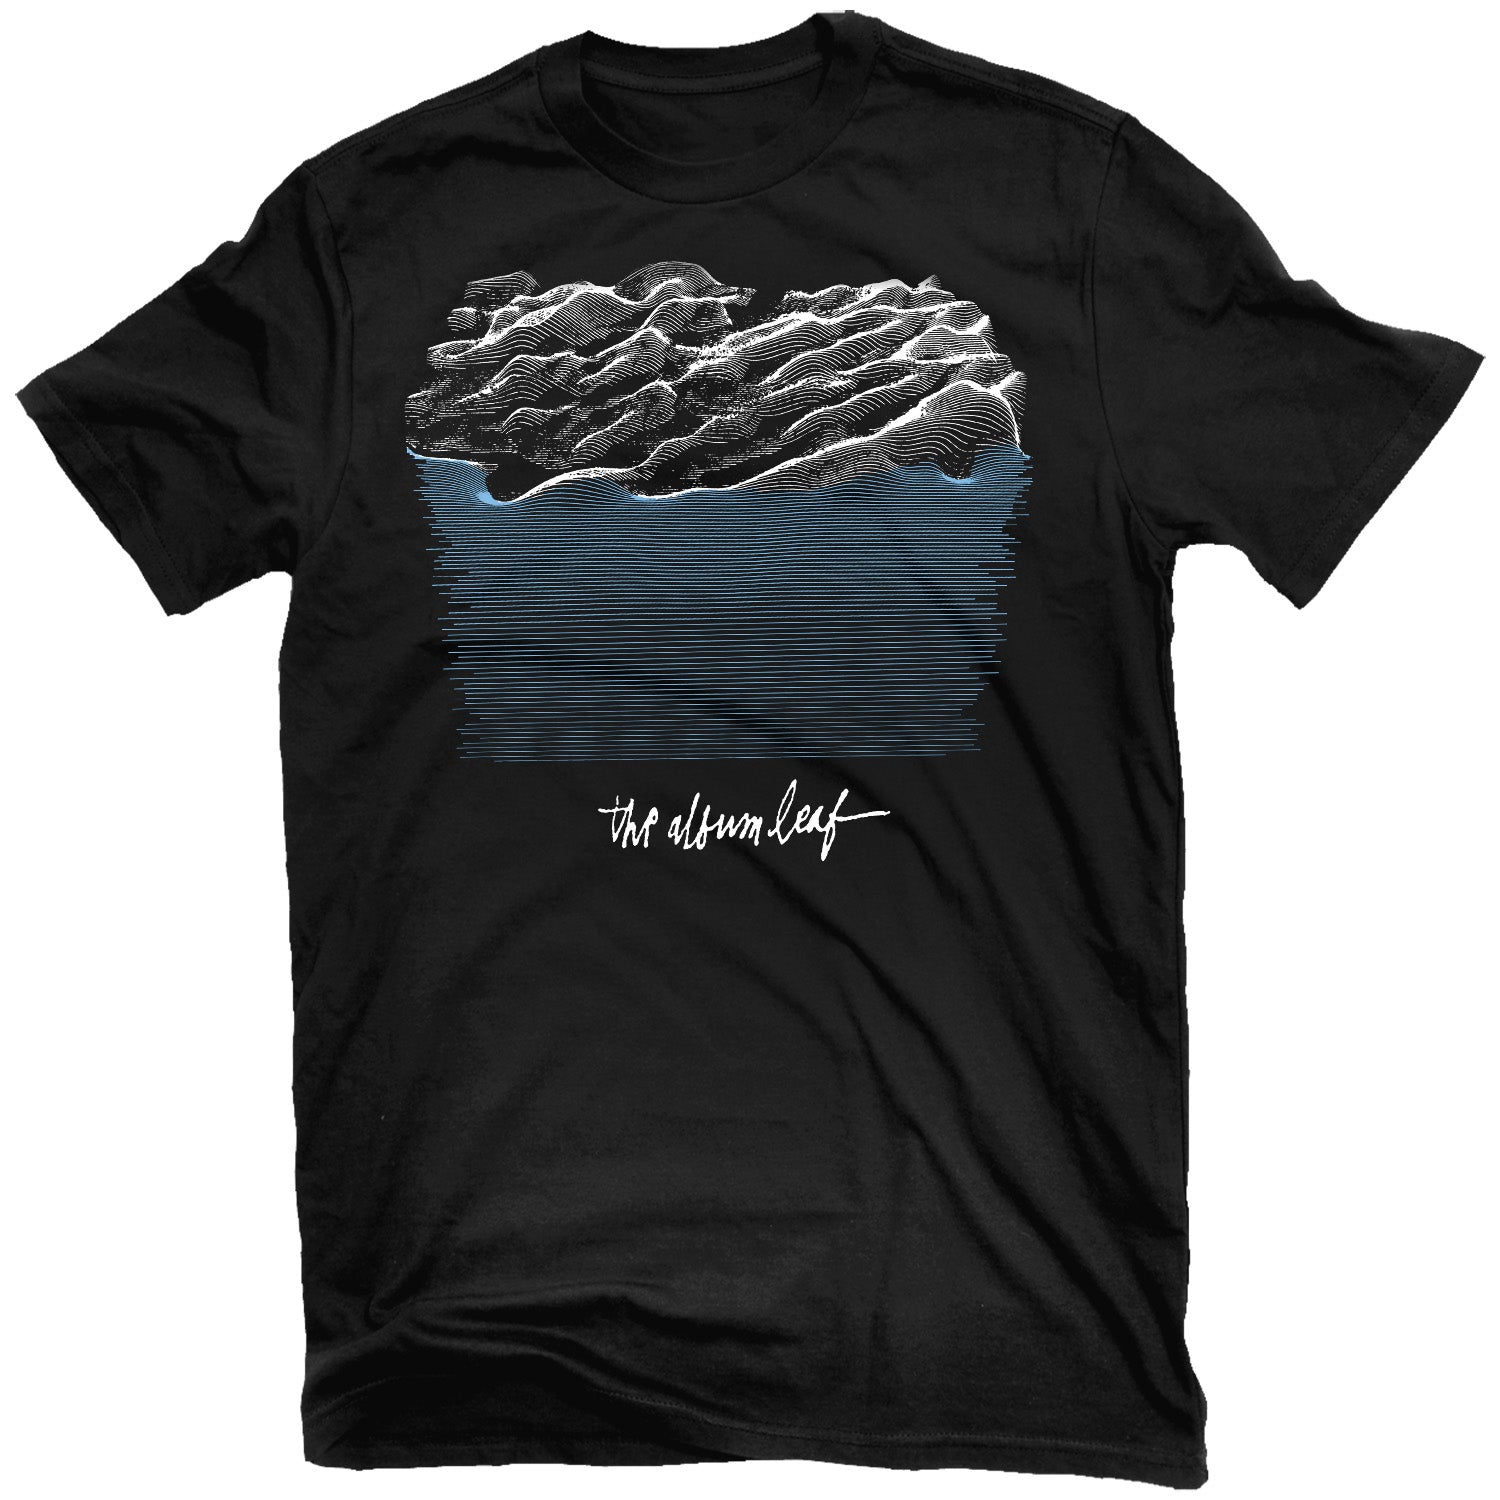 The Album Leaf "Between Waves" T-Shirt